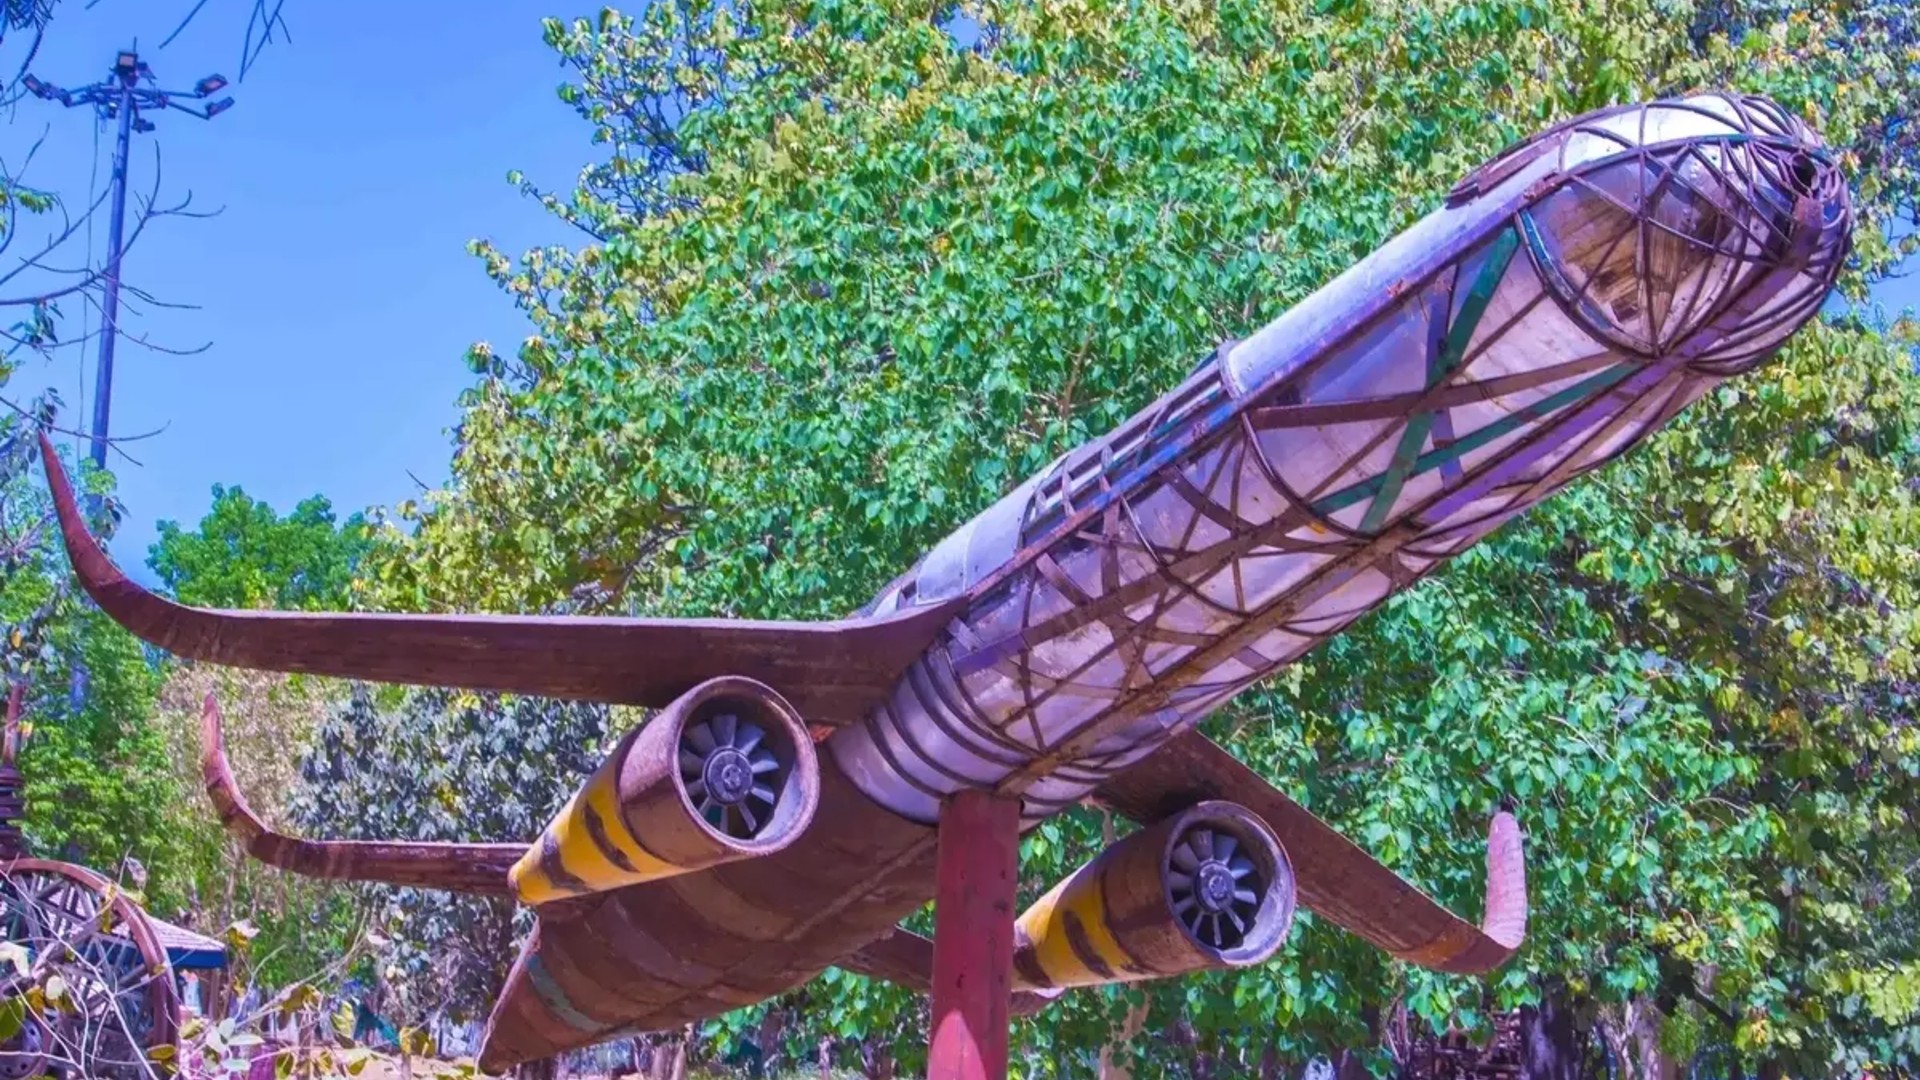 Gurugram To Get Waste To Wonder Park With 30 Stunning Sculptures Made Of Scrap